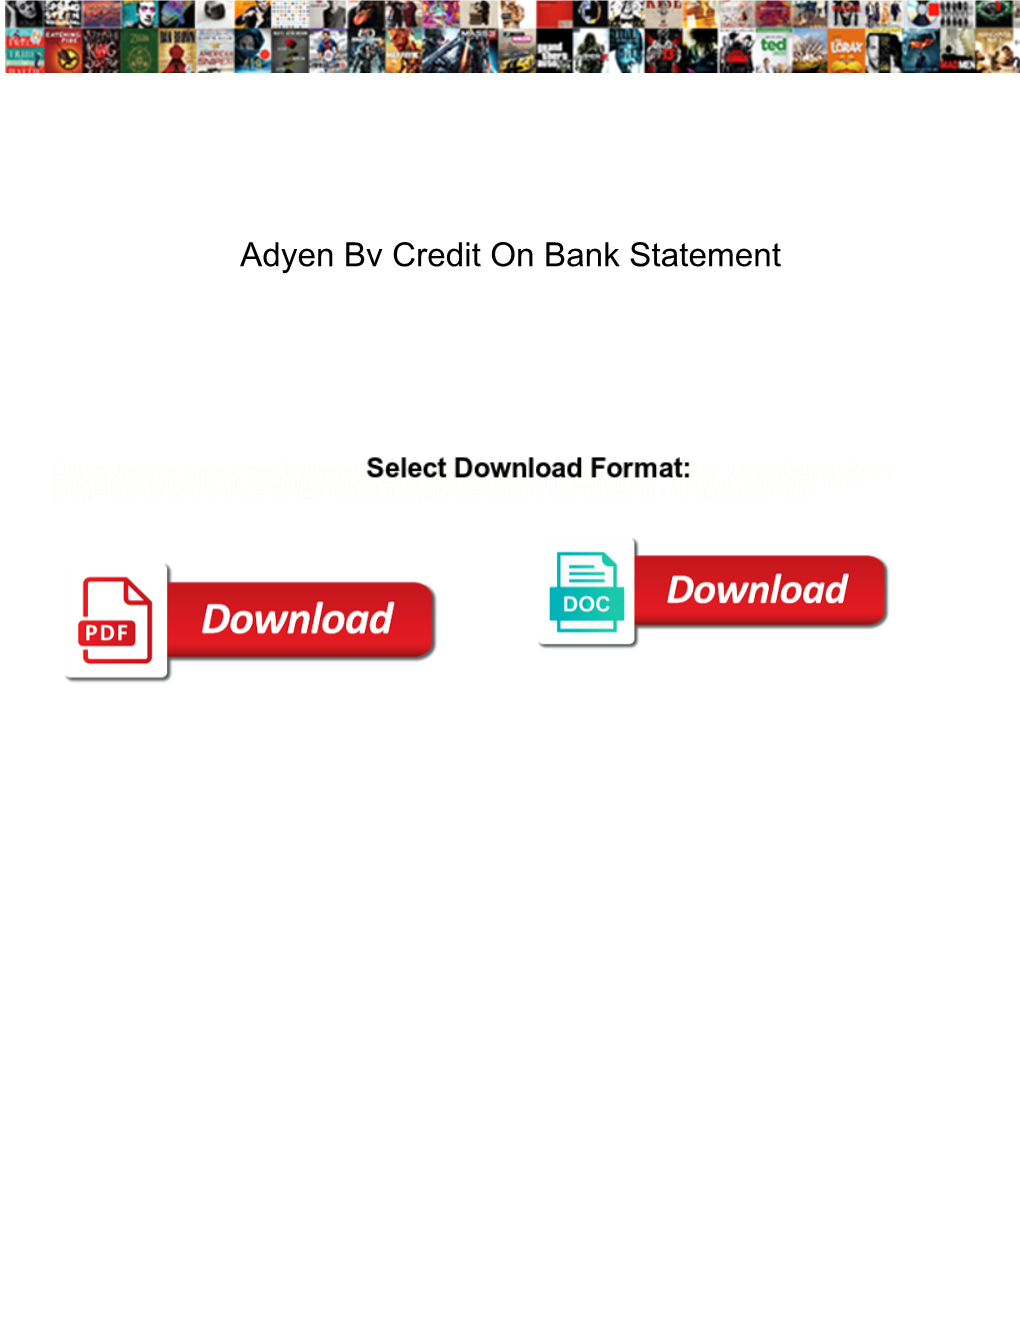 Adyen Bv Credit on Bank Statement